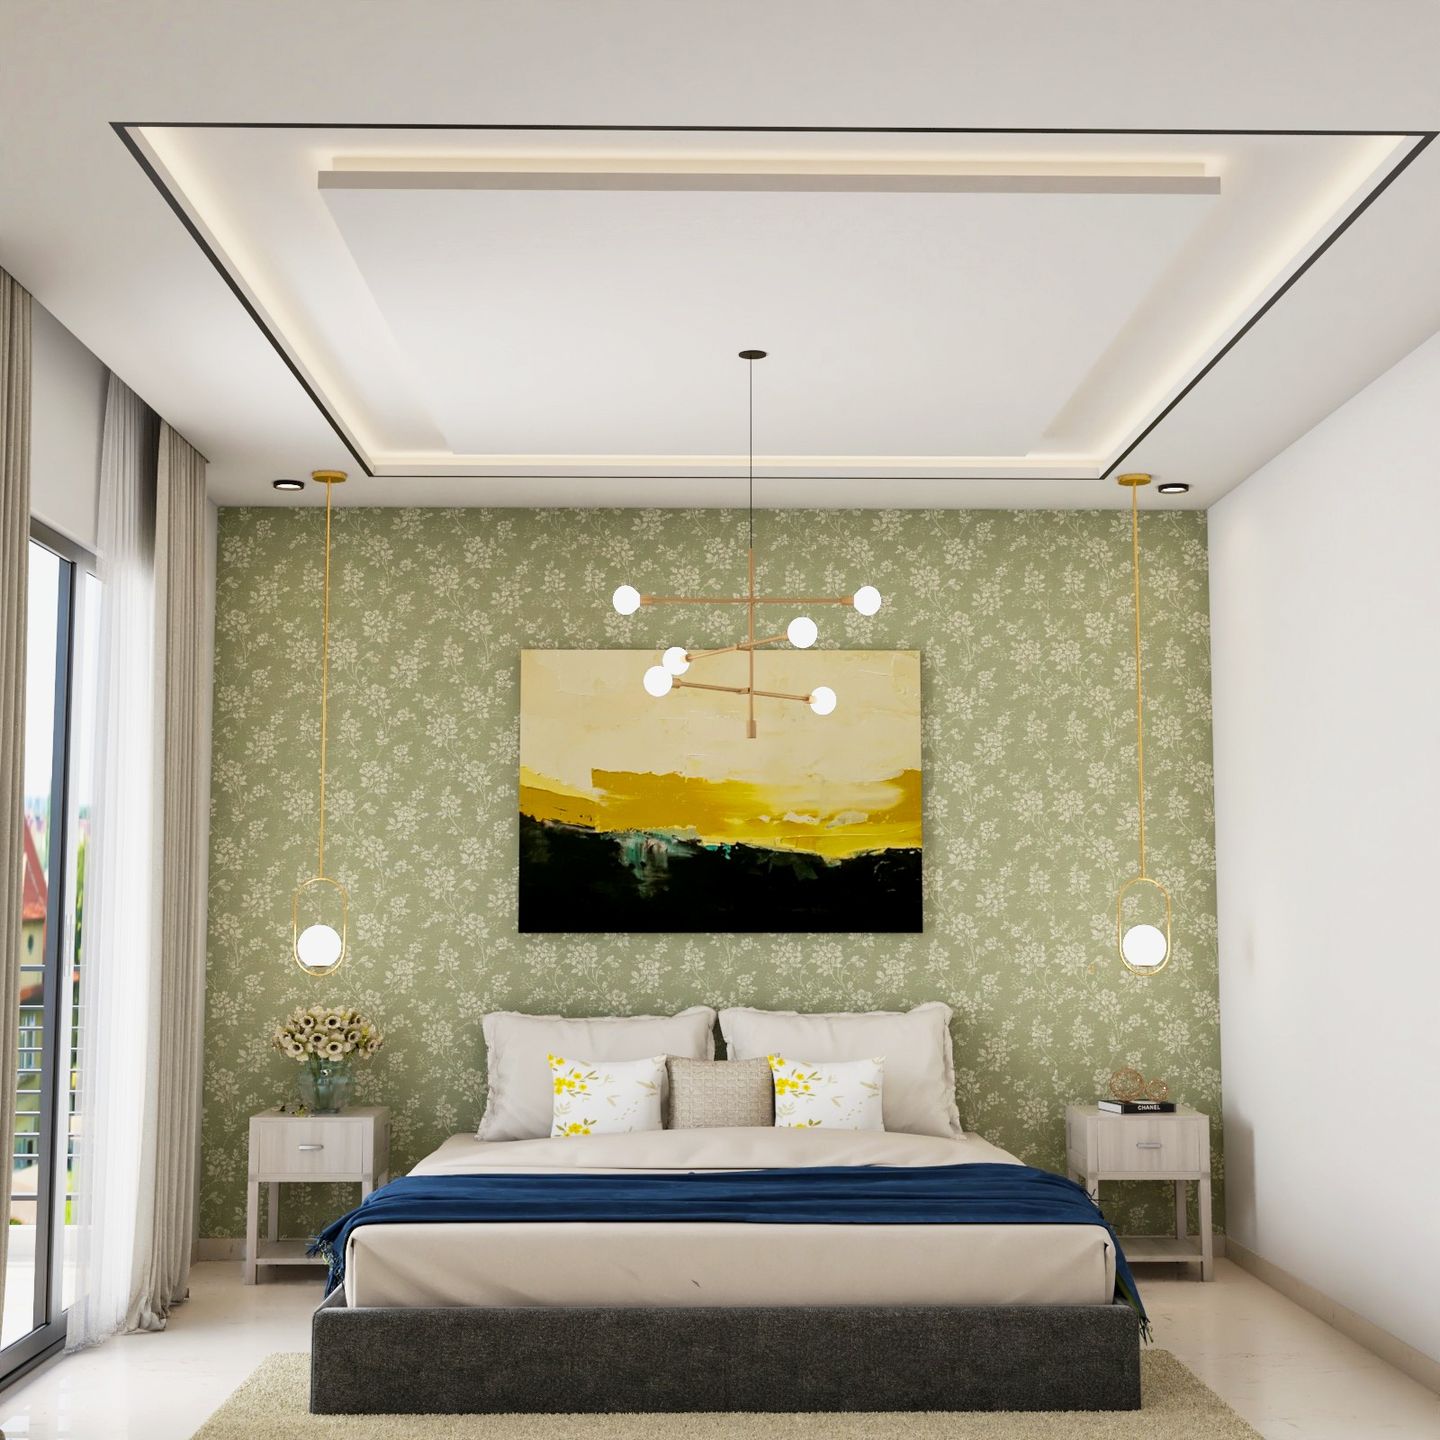 Multilayered Gypsum Ceiling Design With Ornamental Chandelier - Livspace